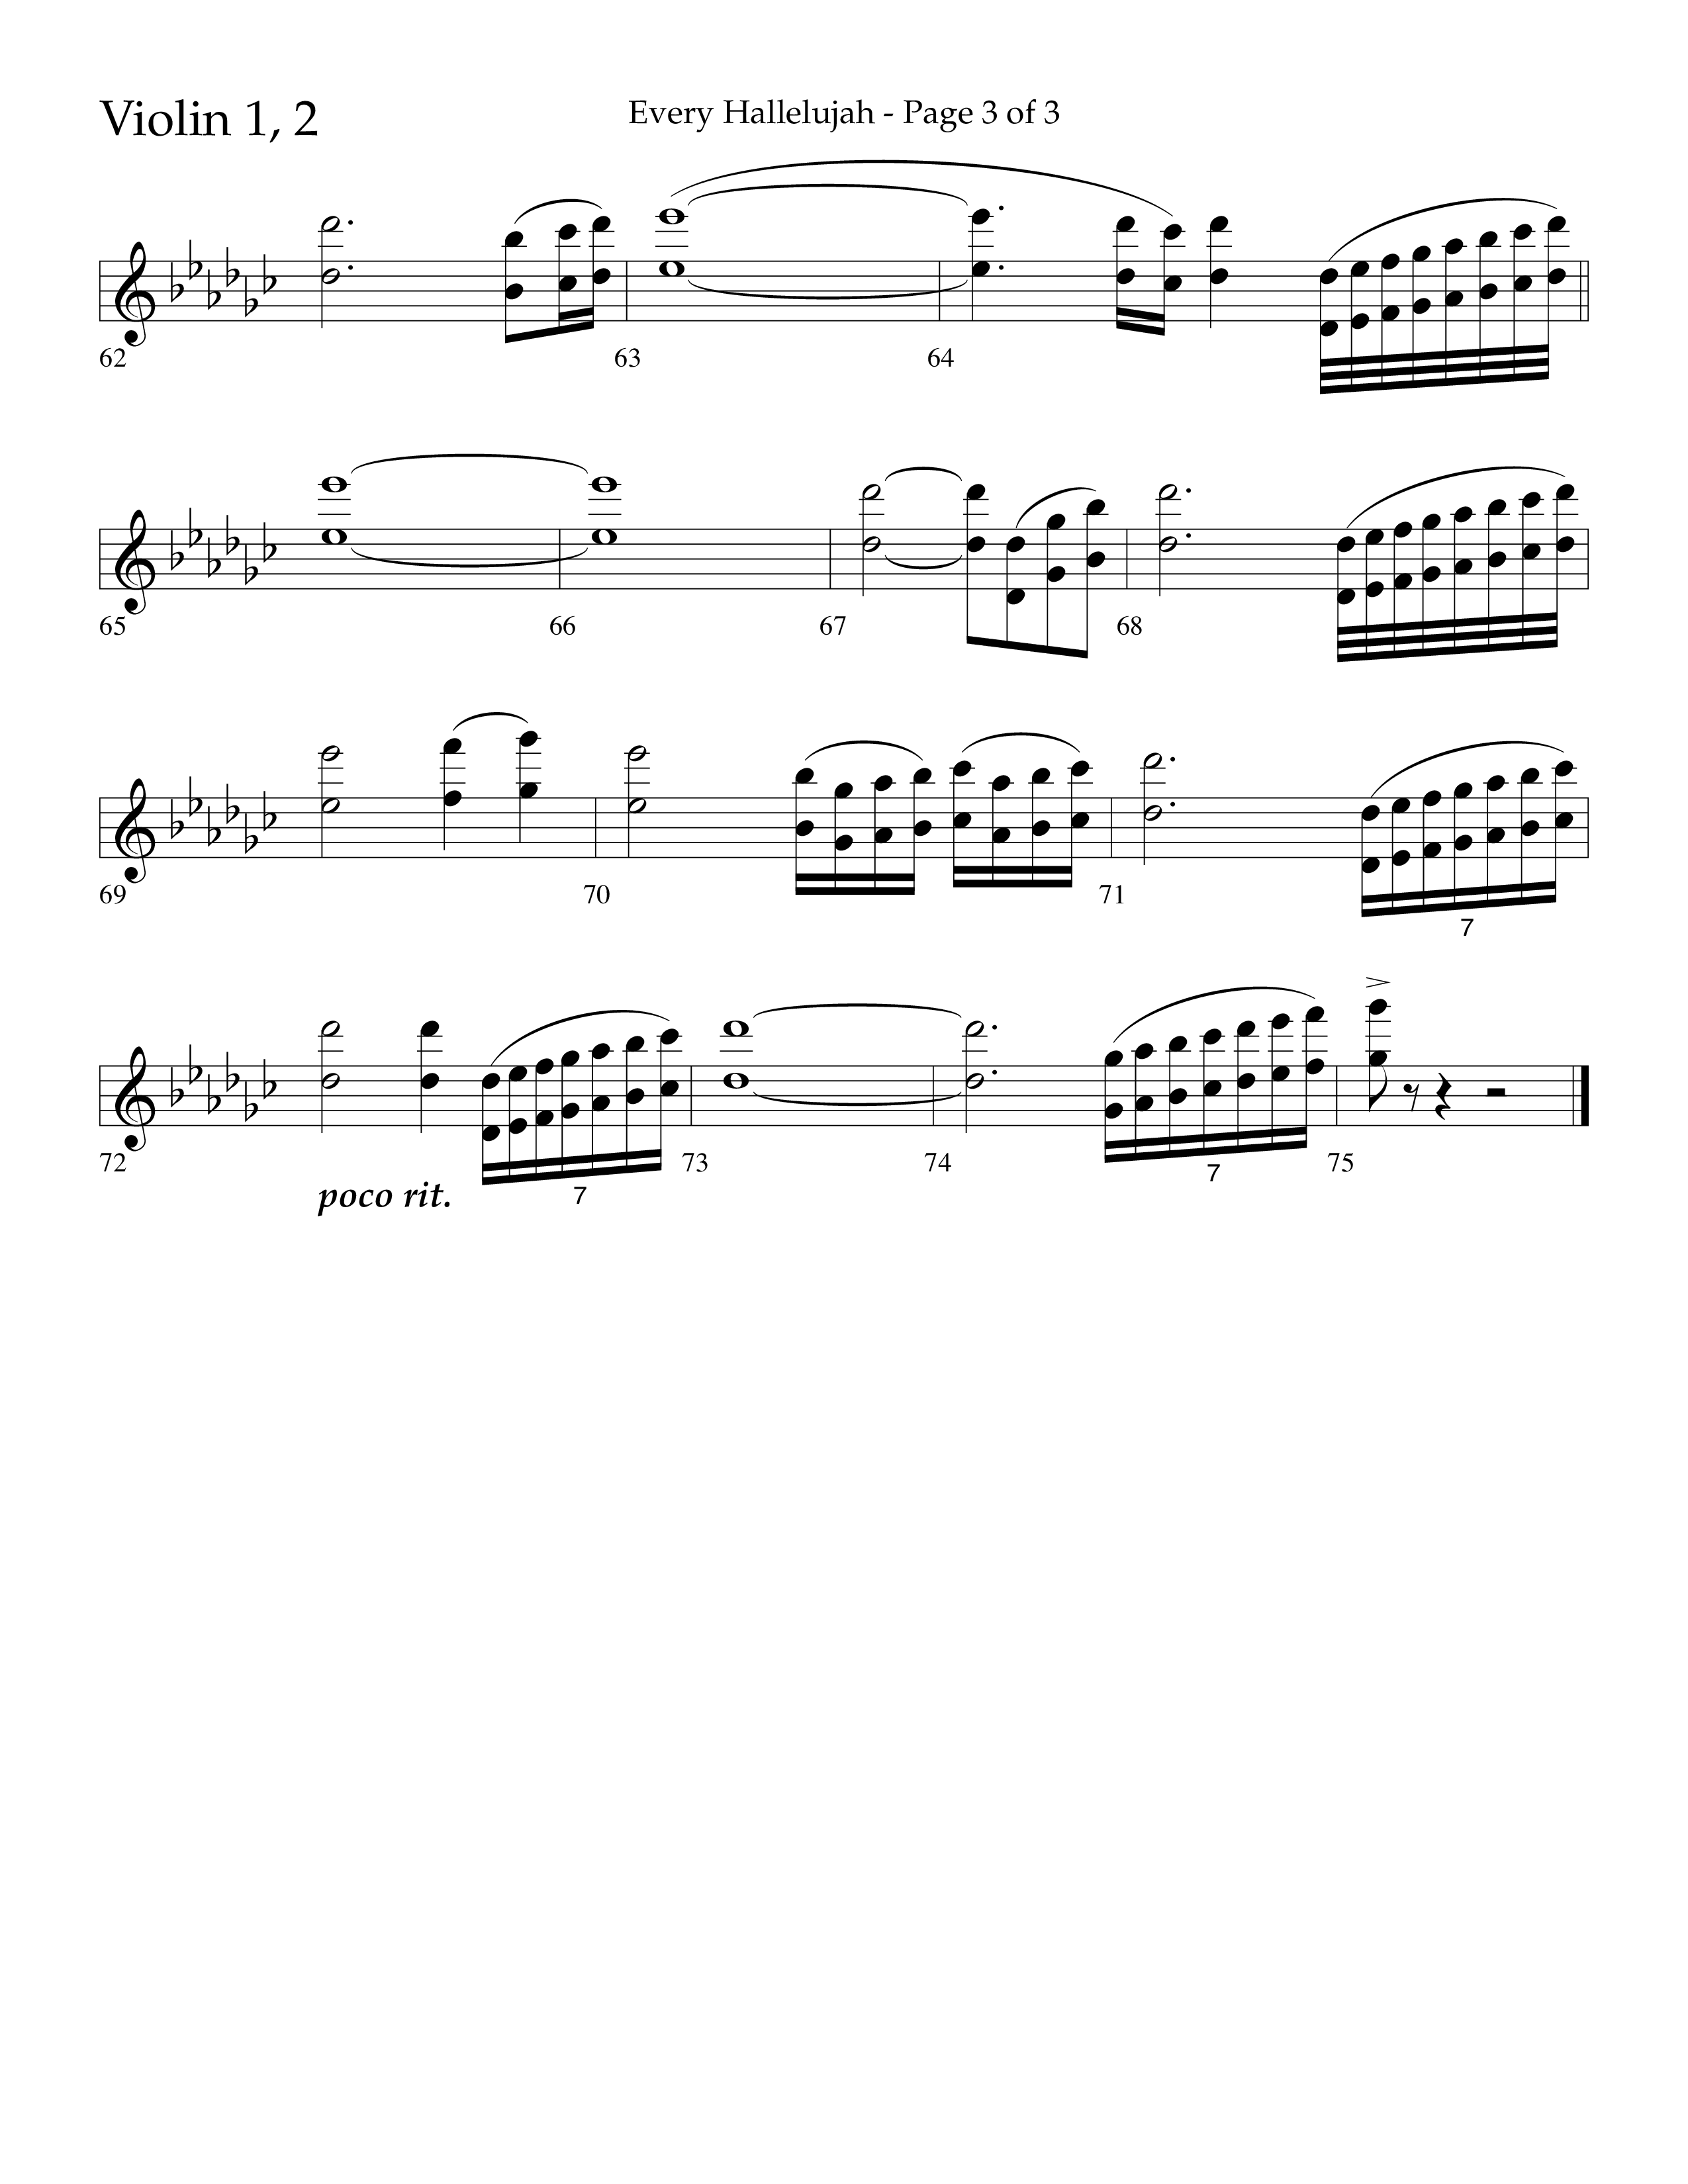 Every Hallelujah (Choral Anthem SATB) Violin 1/2 (Lifeway Choral / Arr. Marty Hamby)